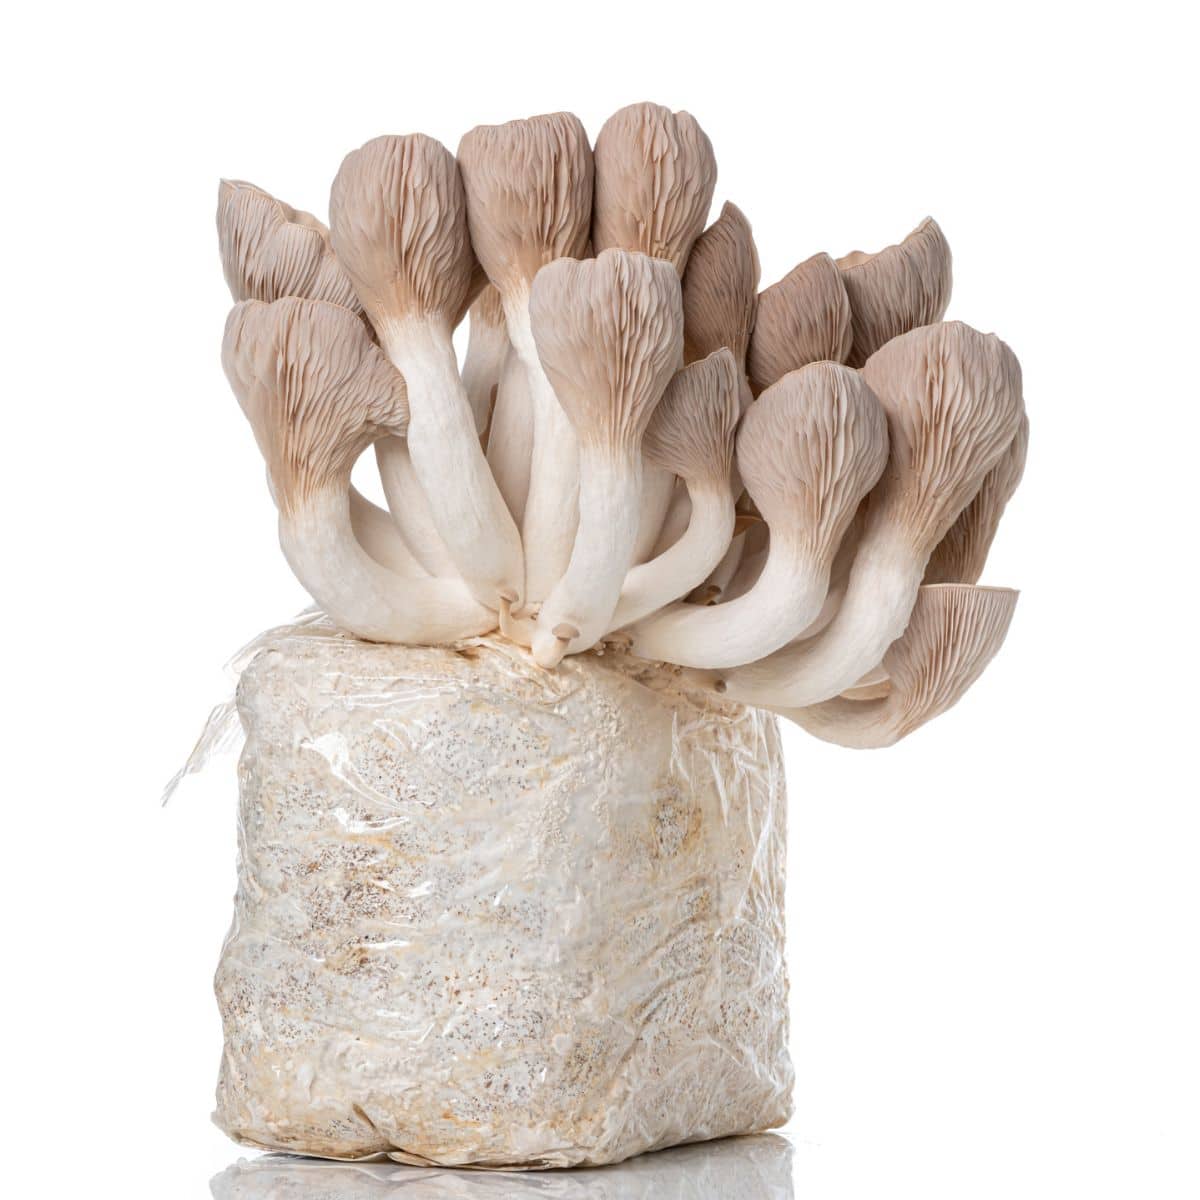 king trumpet oyster mushroom grow kit